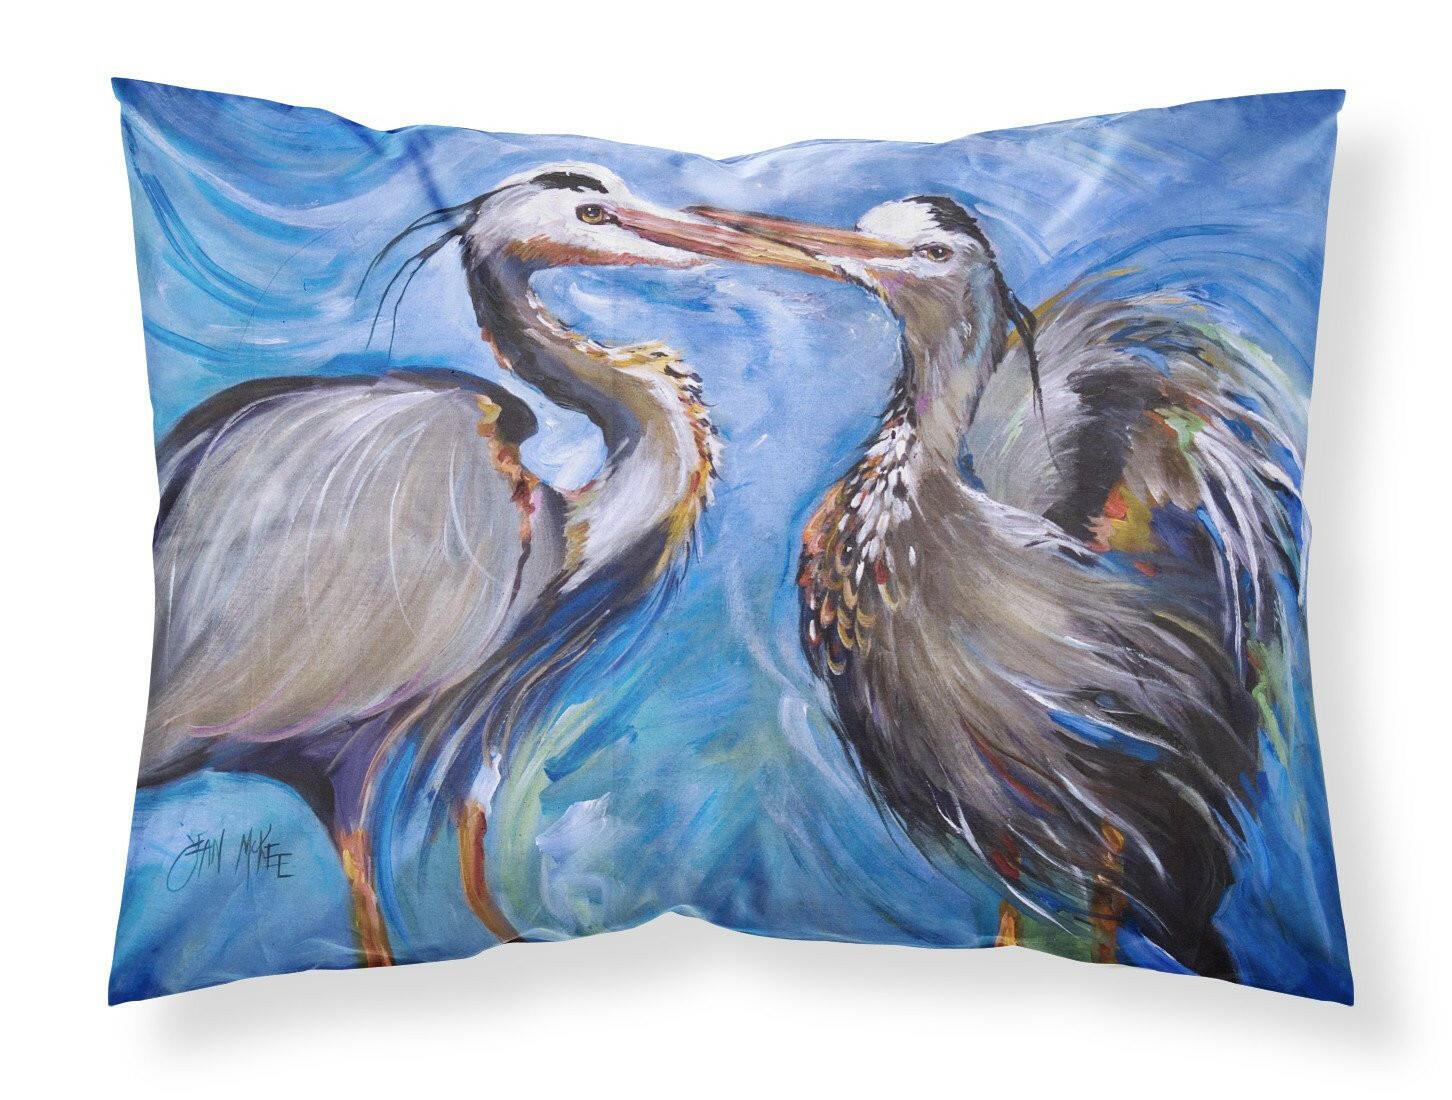 Blue Heron Love Fabric Standard Pillowcase JMK1011PILLOWCASE by Caroline's Treasures